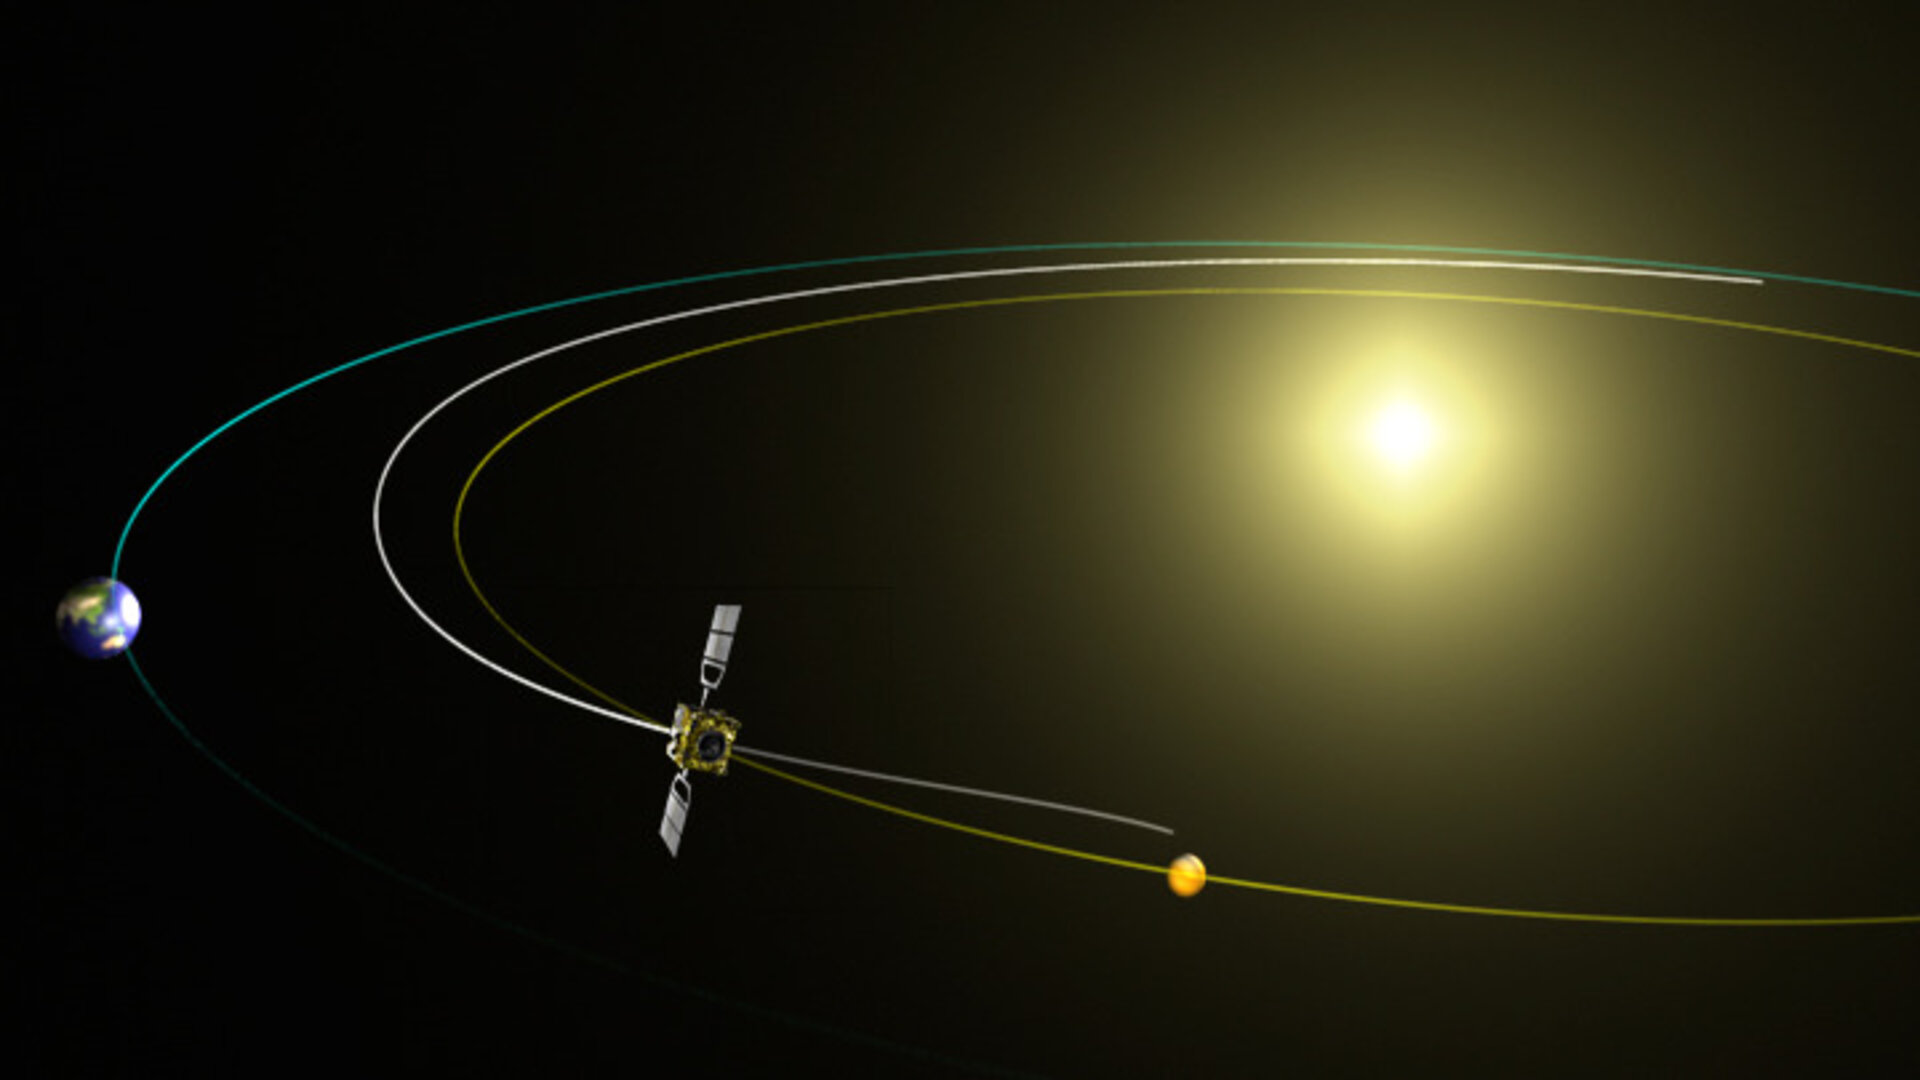 Venus Express' trajectory